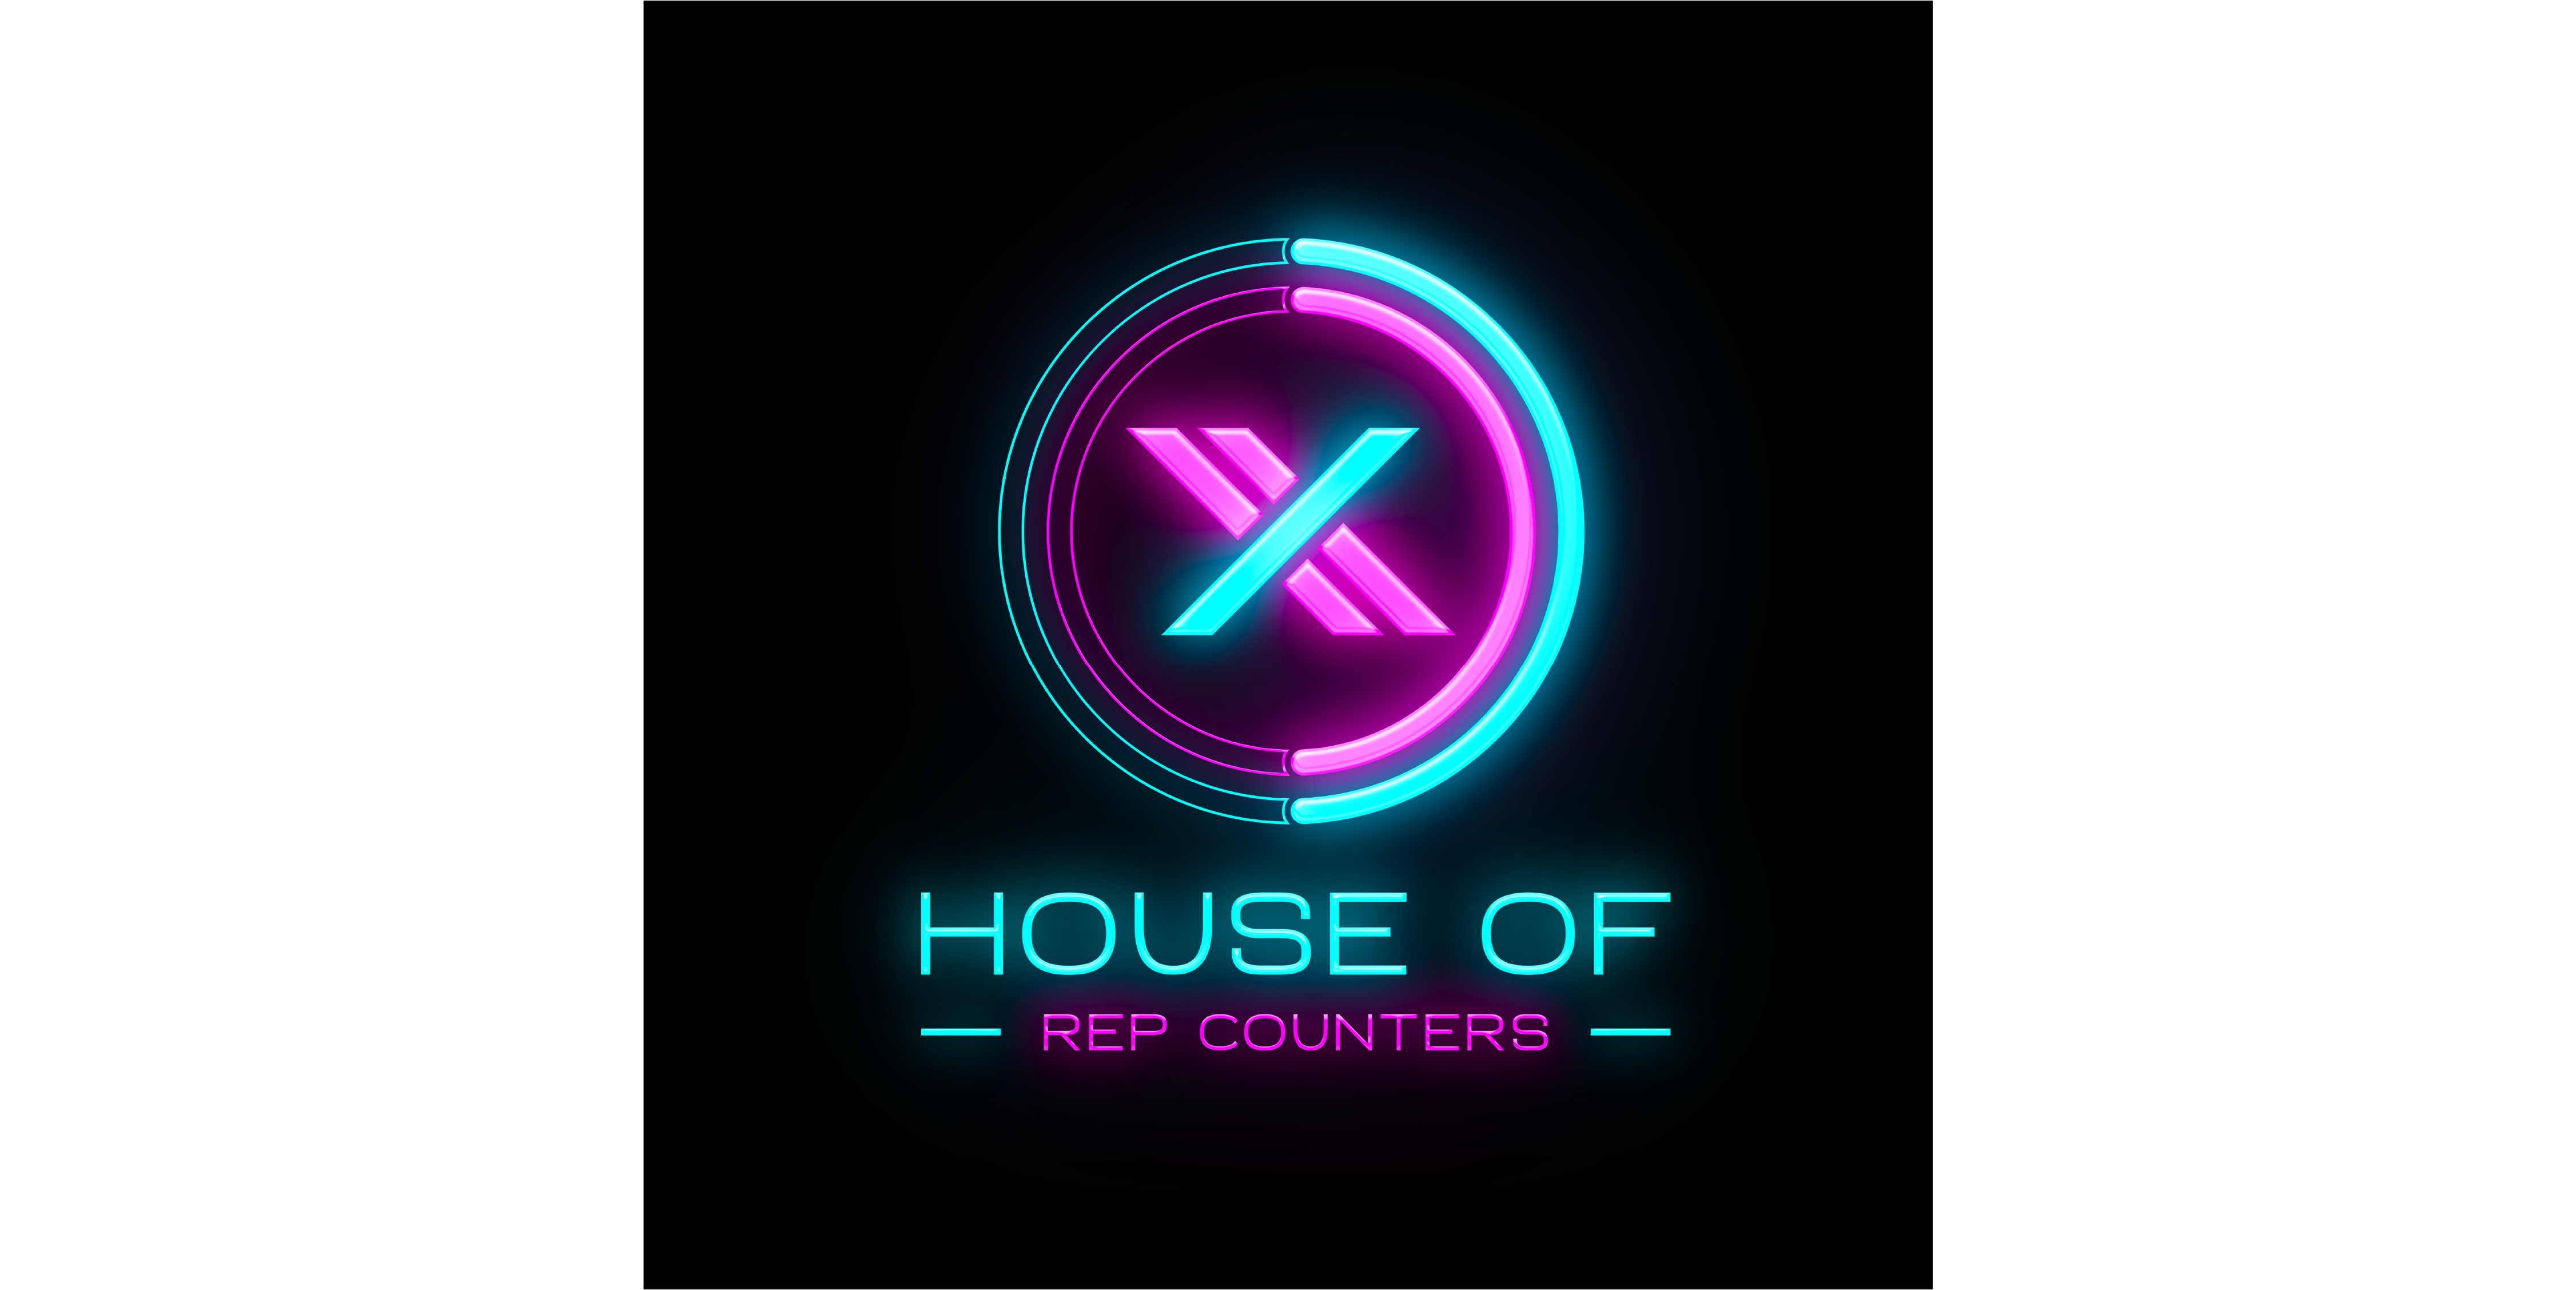 Partnership Brand Logos-01 - House of Rep Counters